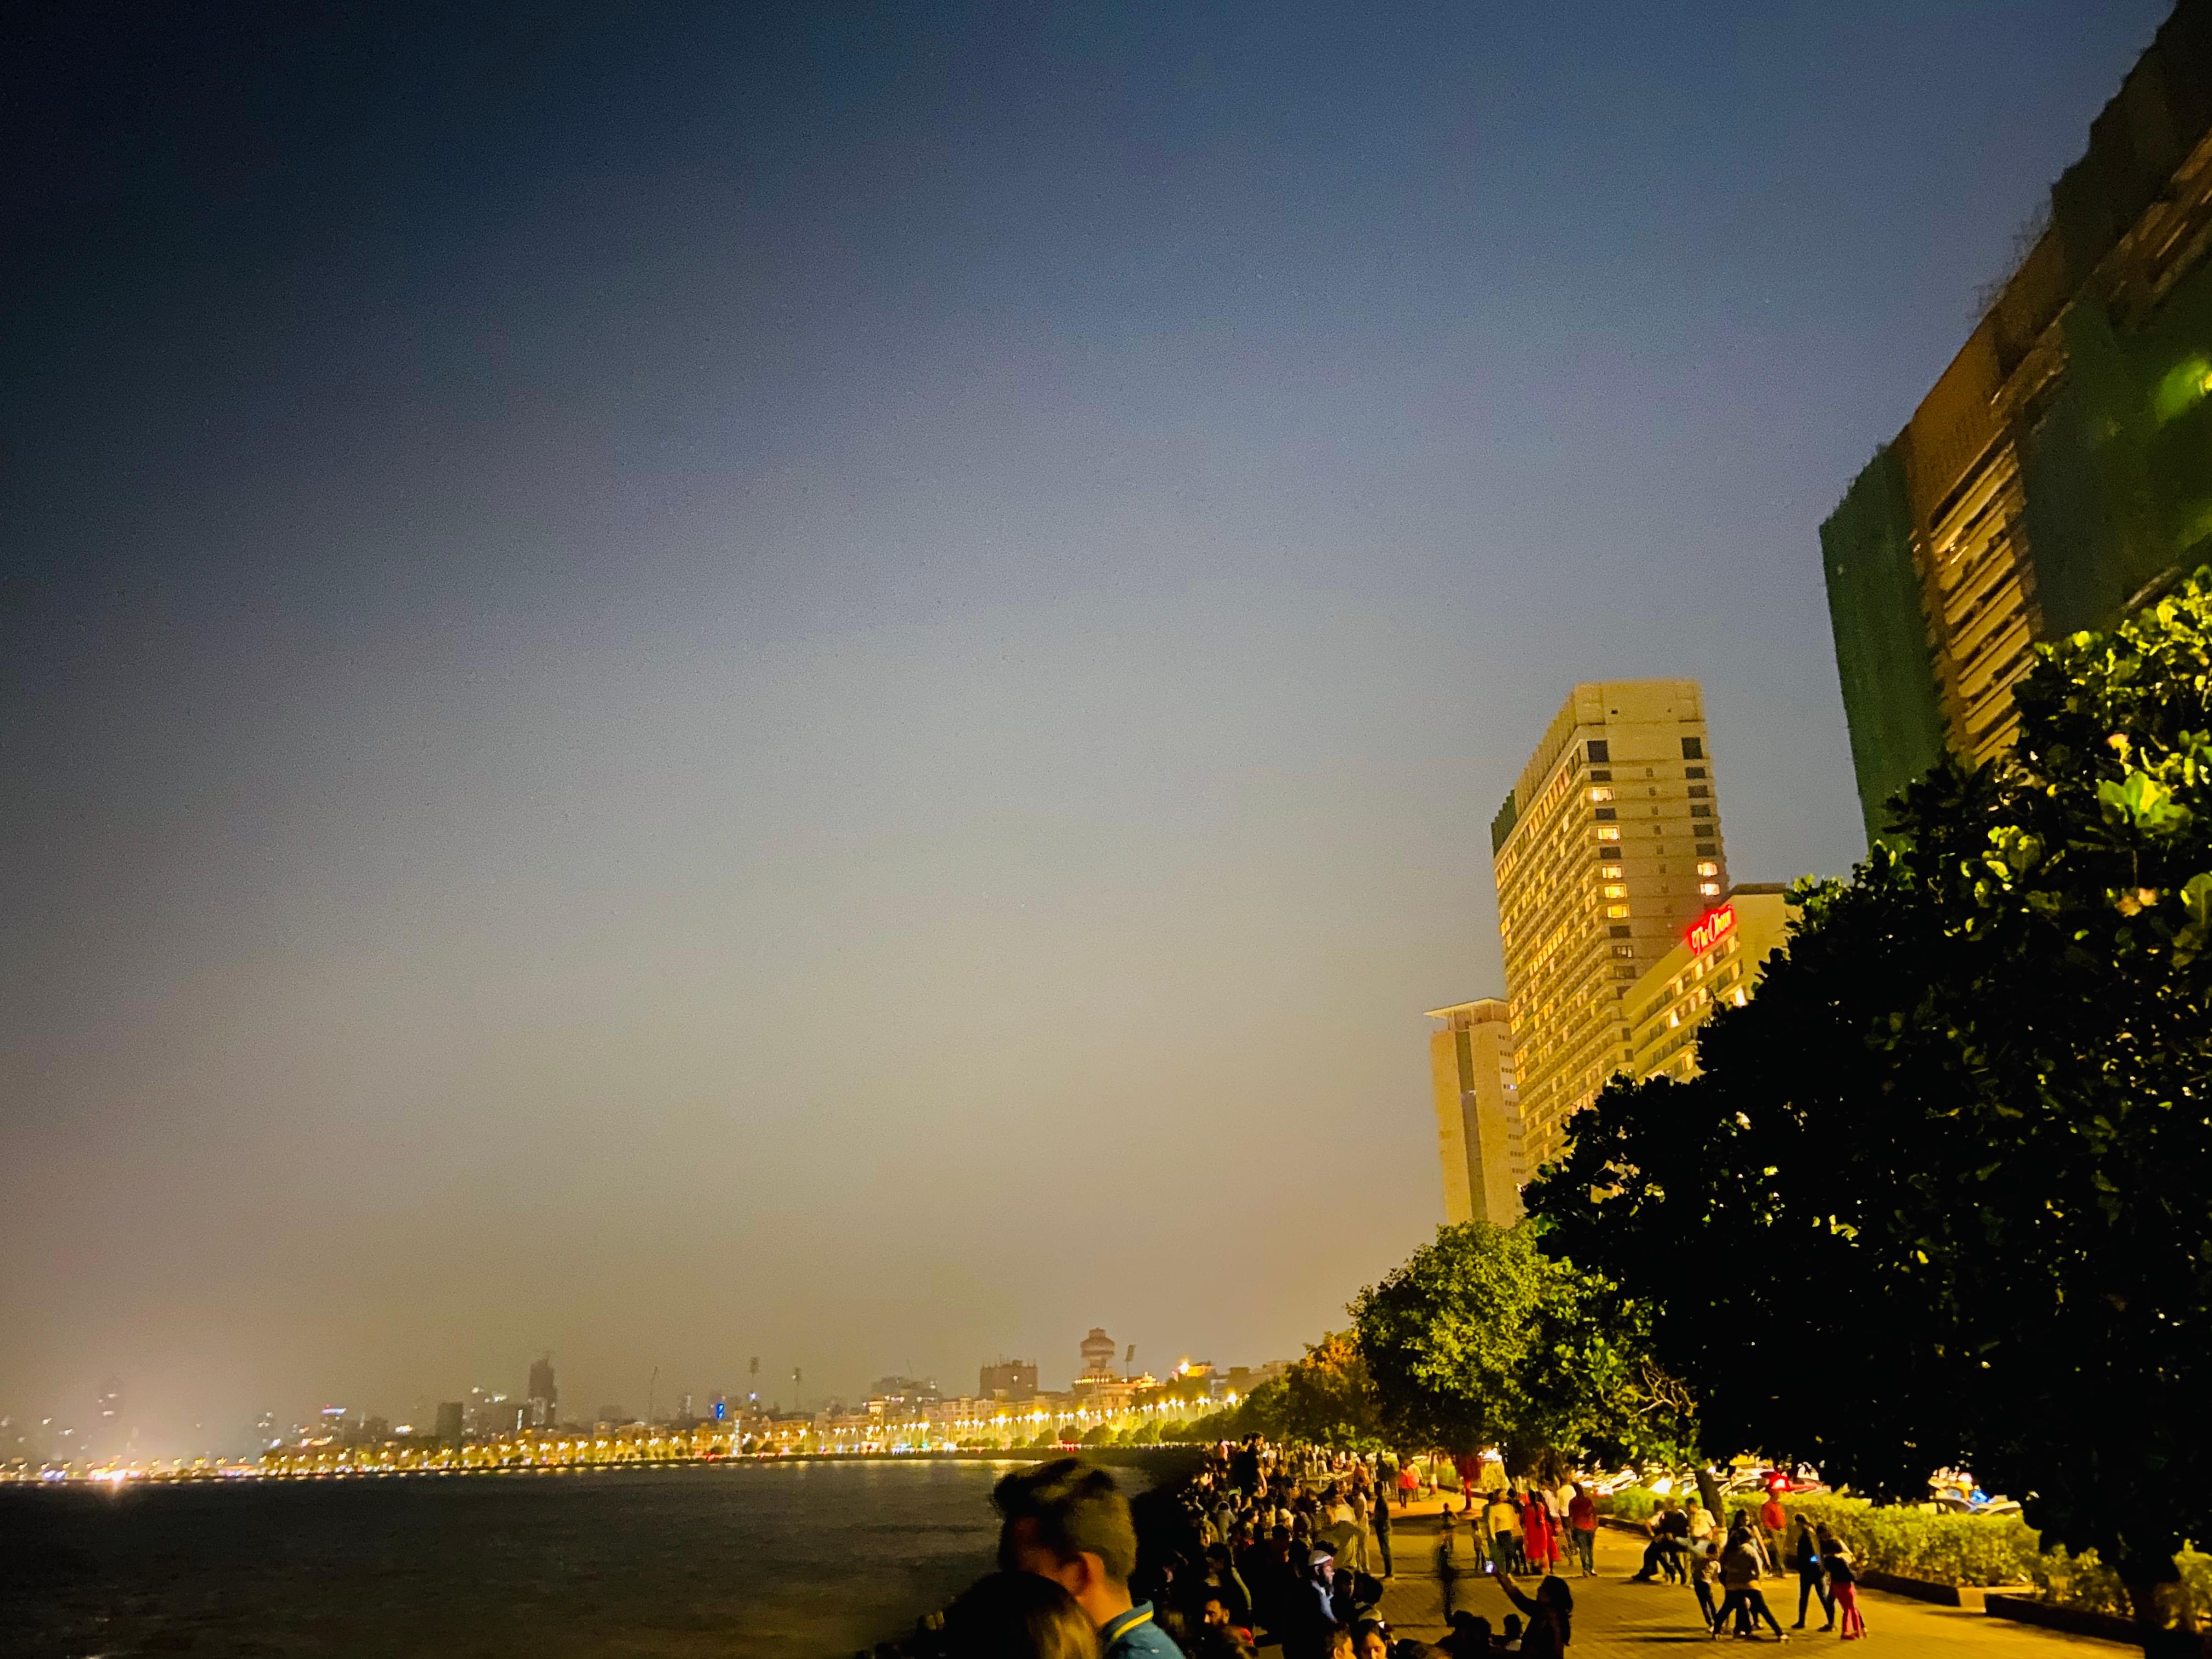 40 Best Places to Visit in Mumbai, Maharashtra